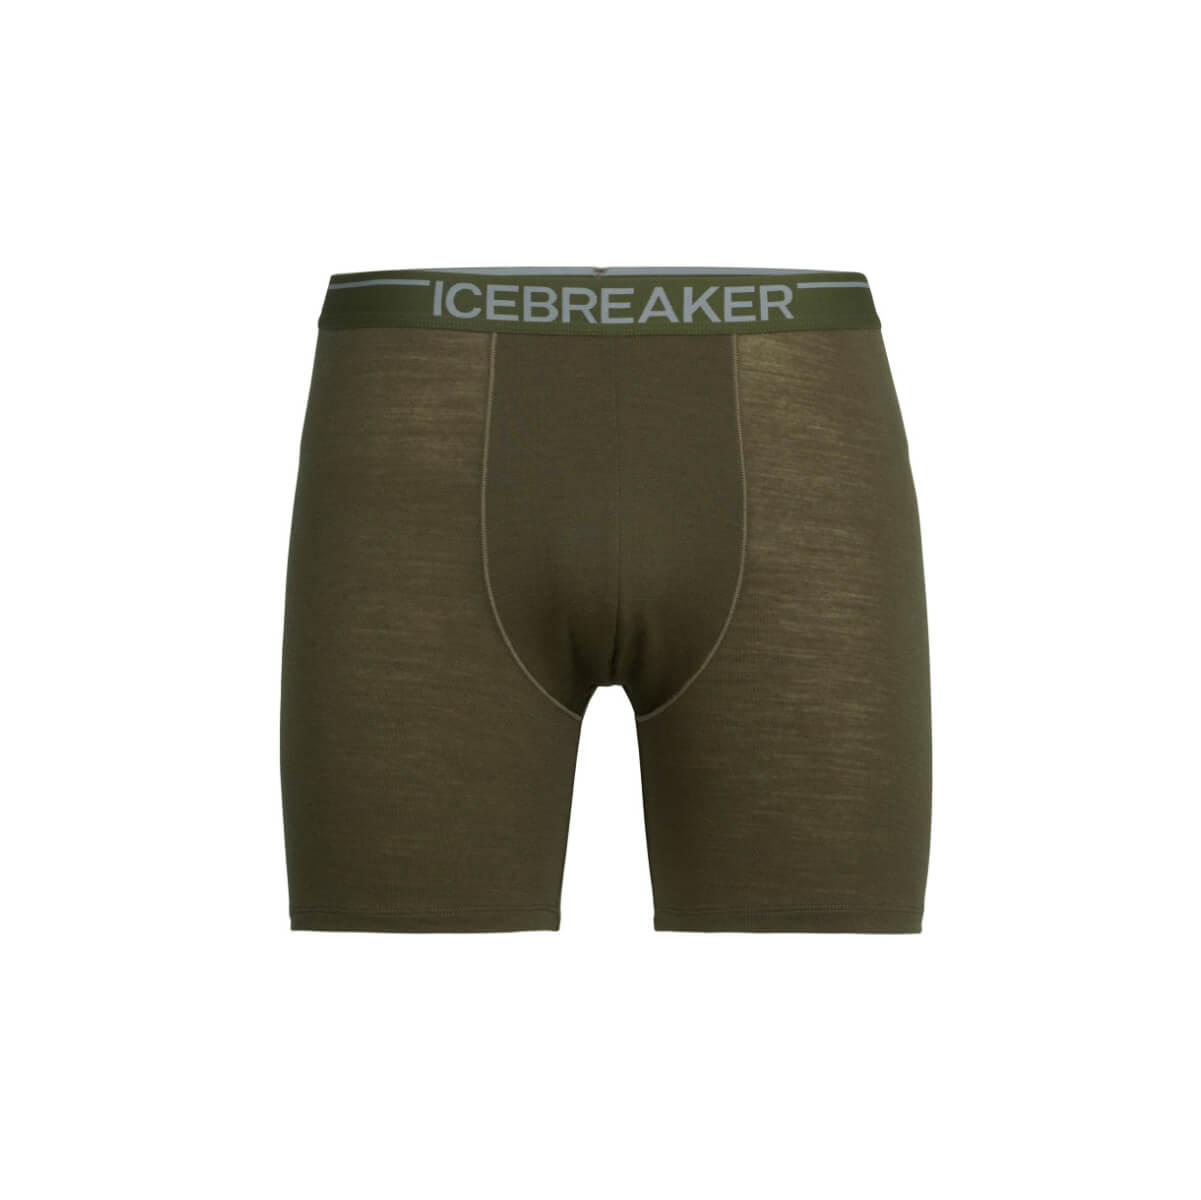 Icebreaker Men's Merino Anatomica Long Boxers Loden